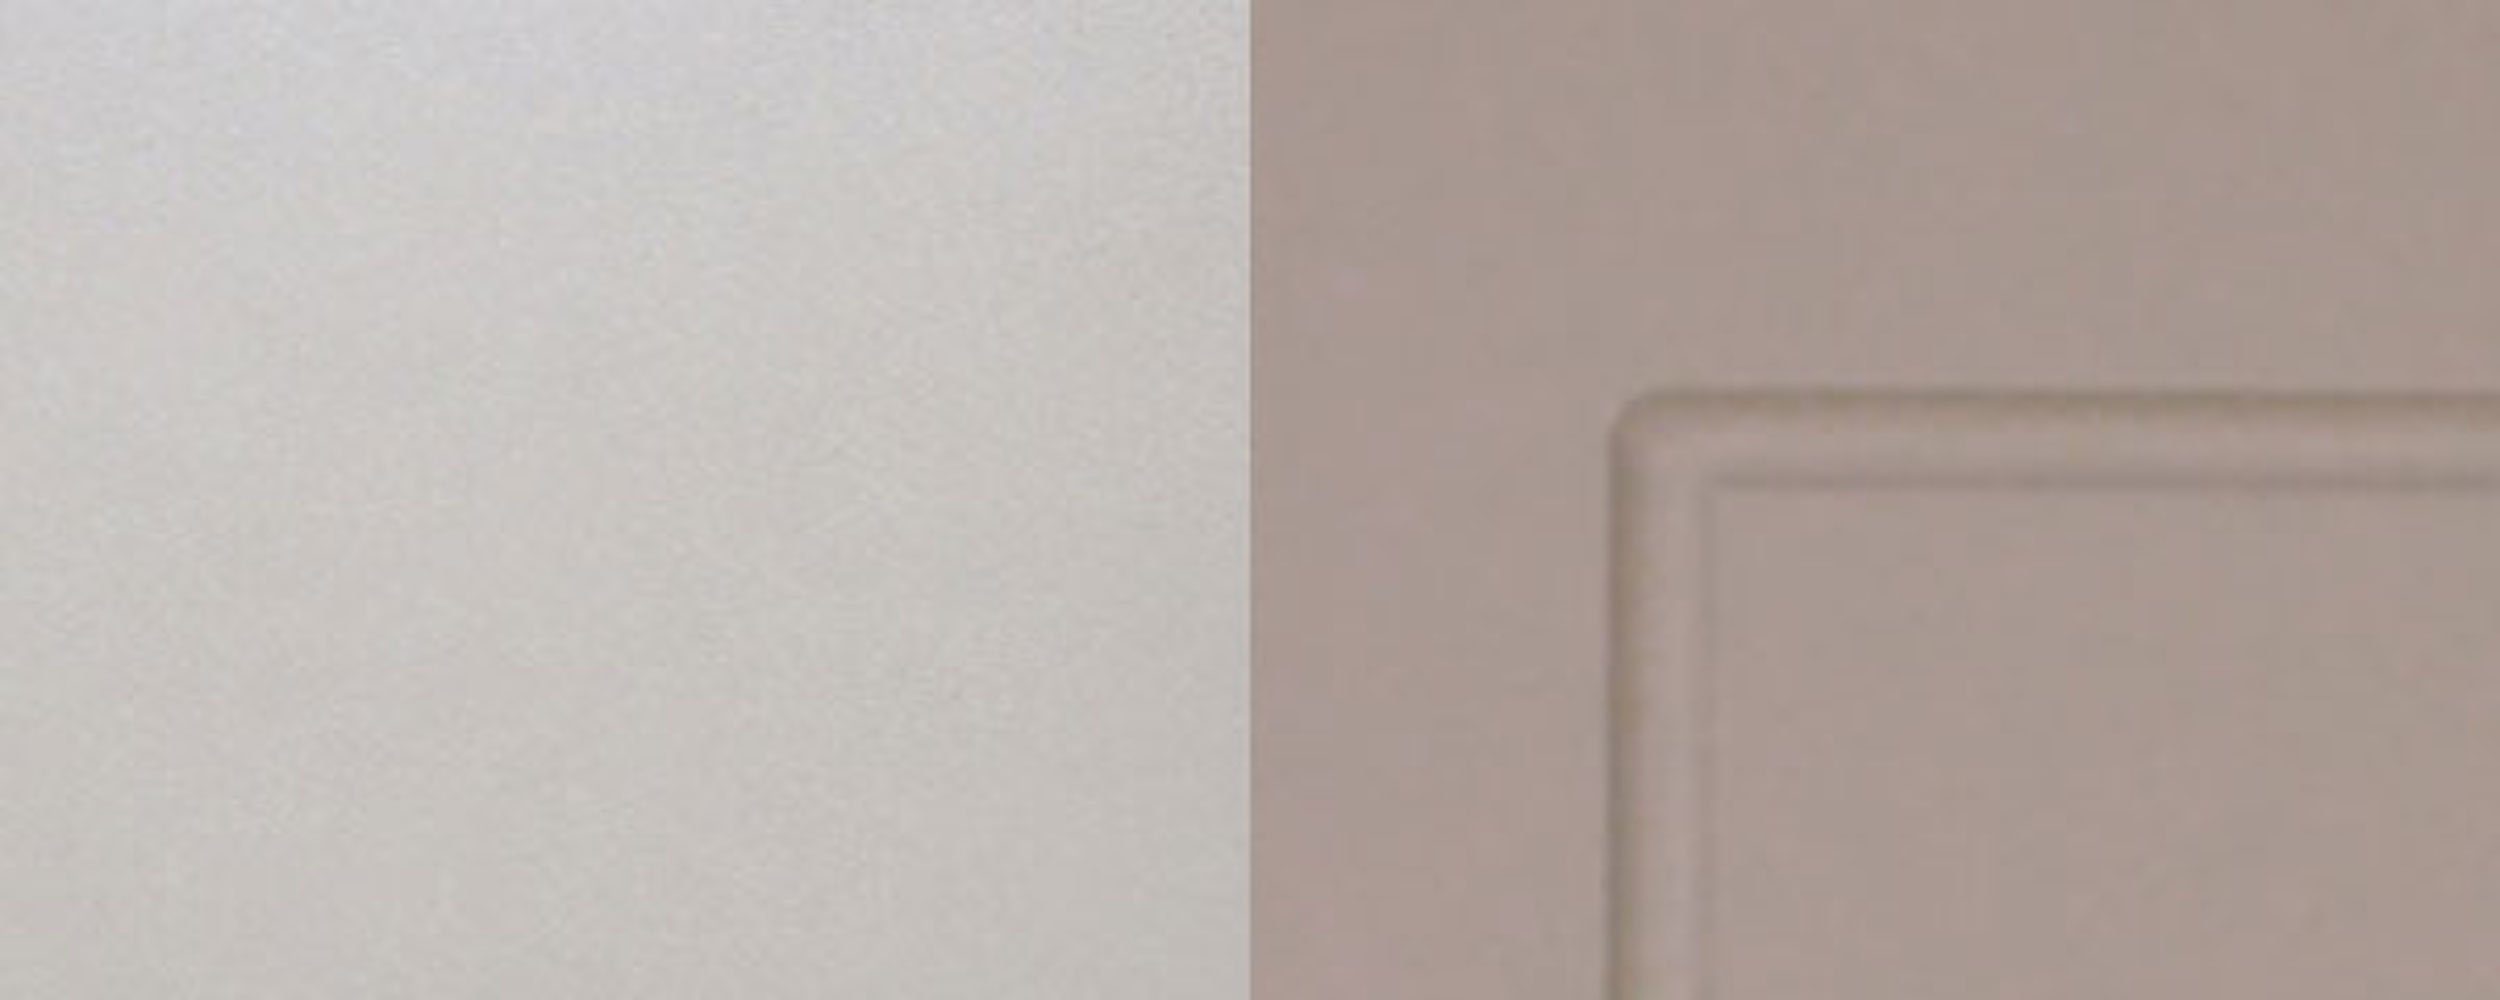 Feldmann-Wohnen Klapphängeschrank Kvantum (Kvantum) wählbar 1 Front- mit matt beige & Korpusfarbe 90cm Klapptür